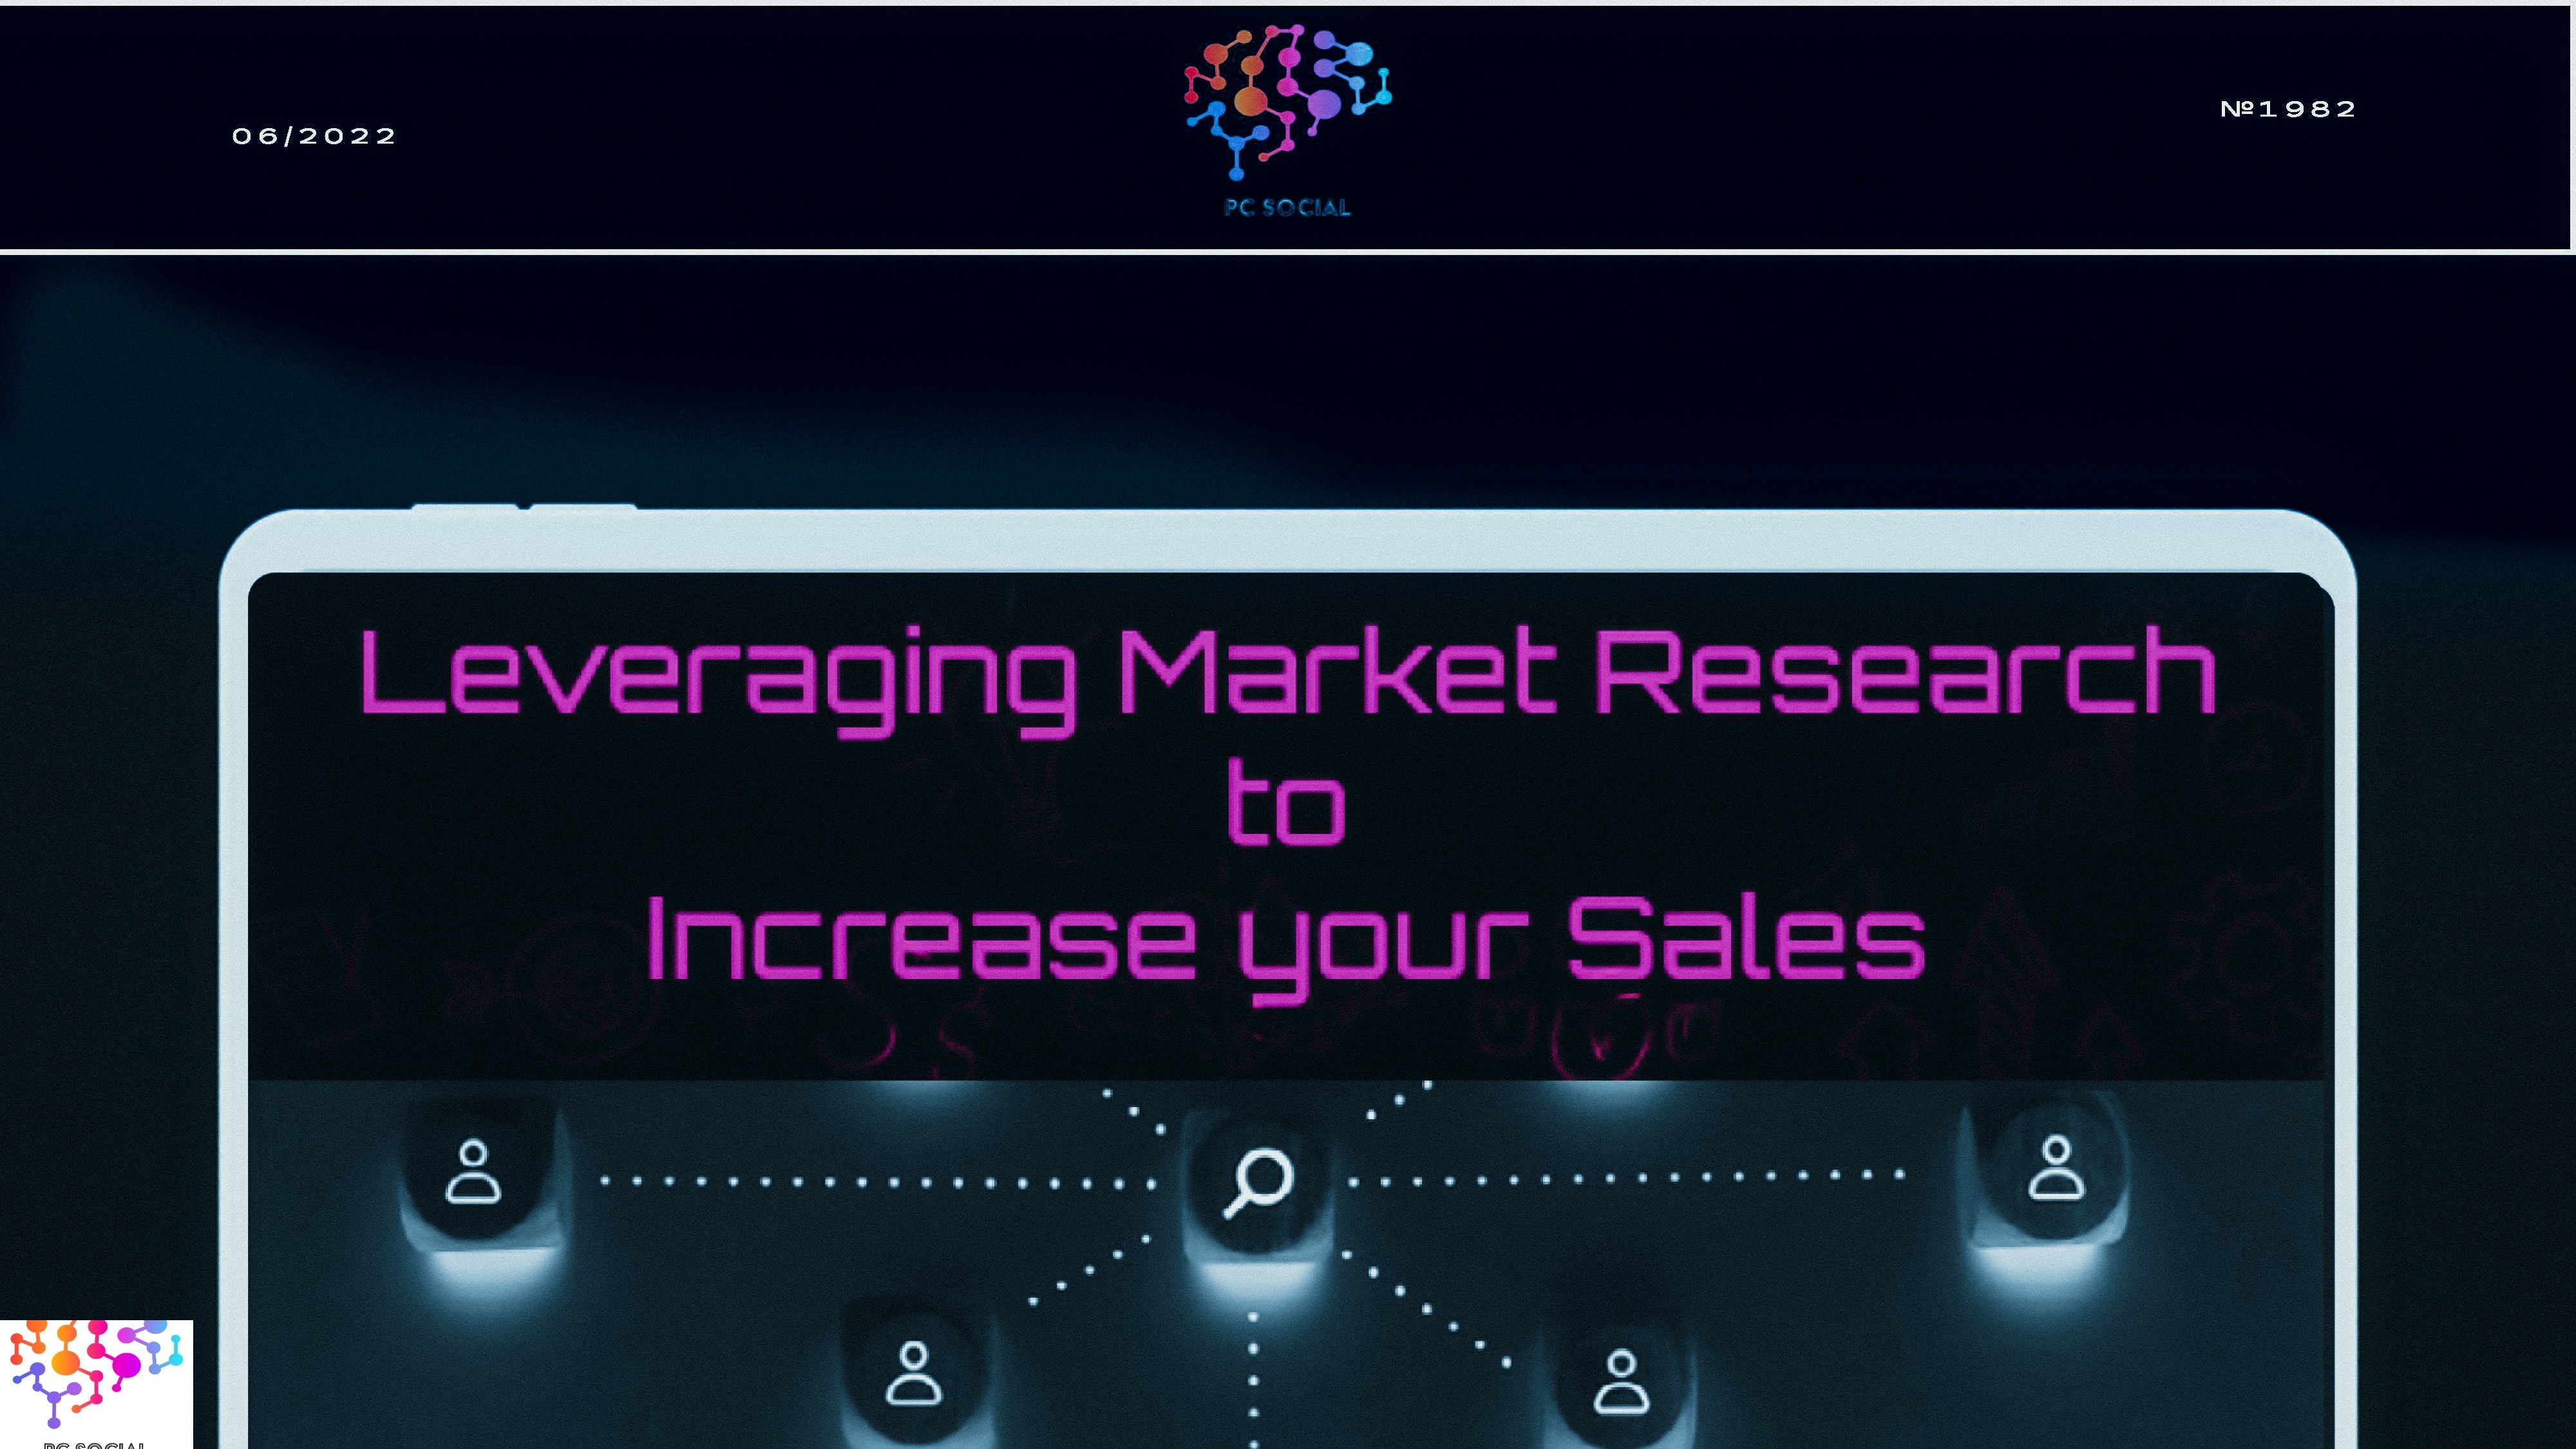 Marketing, Sales, Strategy, Market Research, Sales, Data Analytics, Target Market